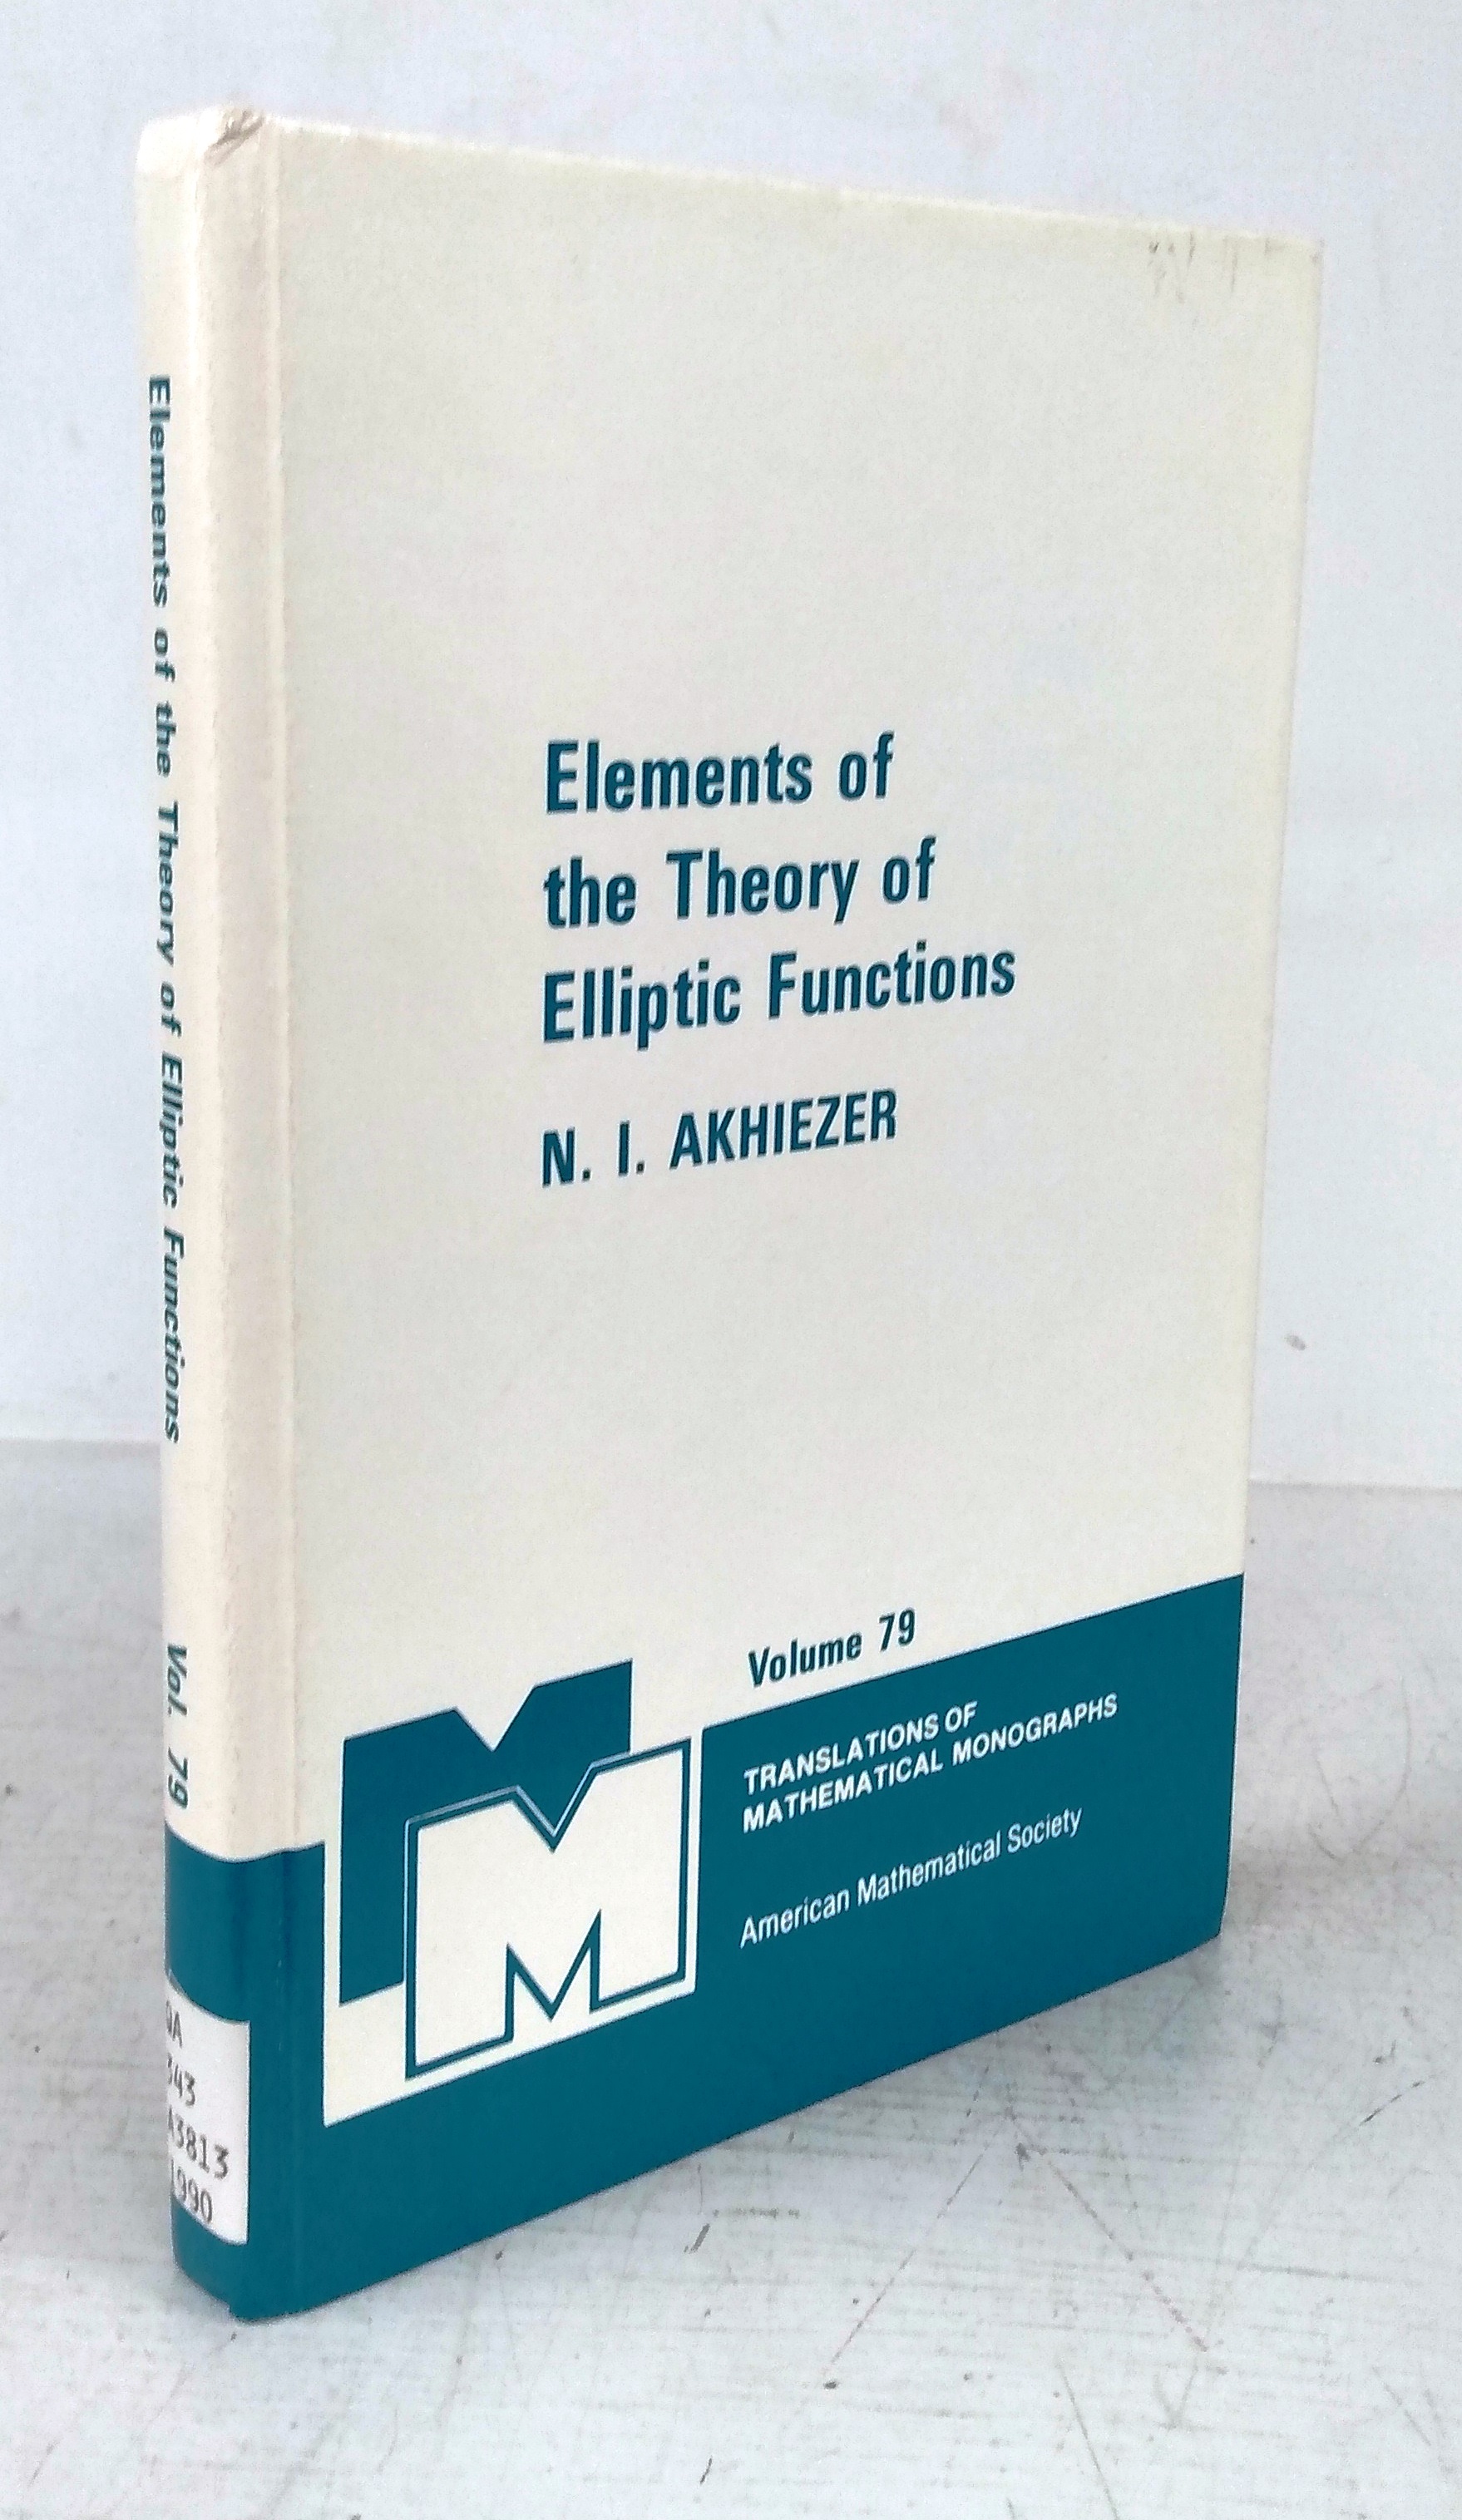 Elements of the Theory of Elliptic Functions - AKHIEZER, N. I.